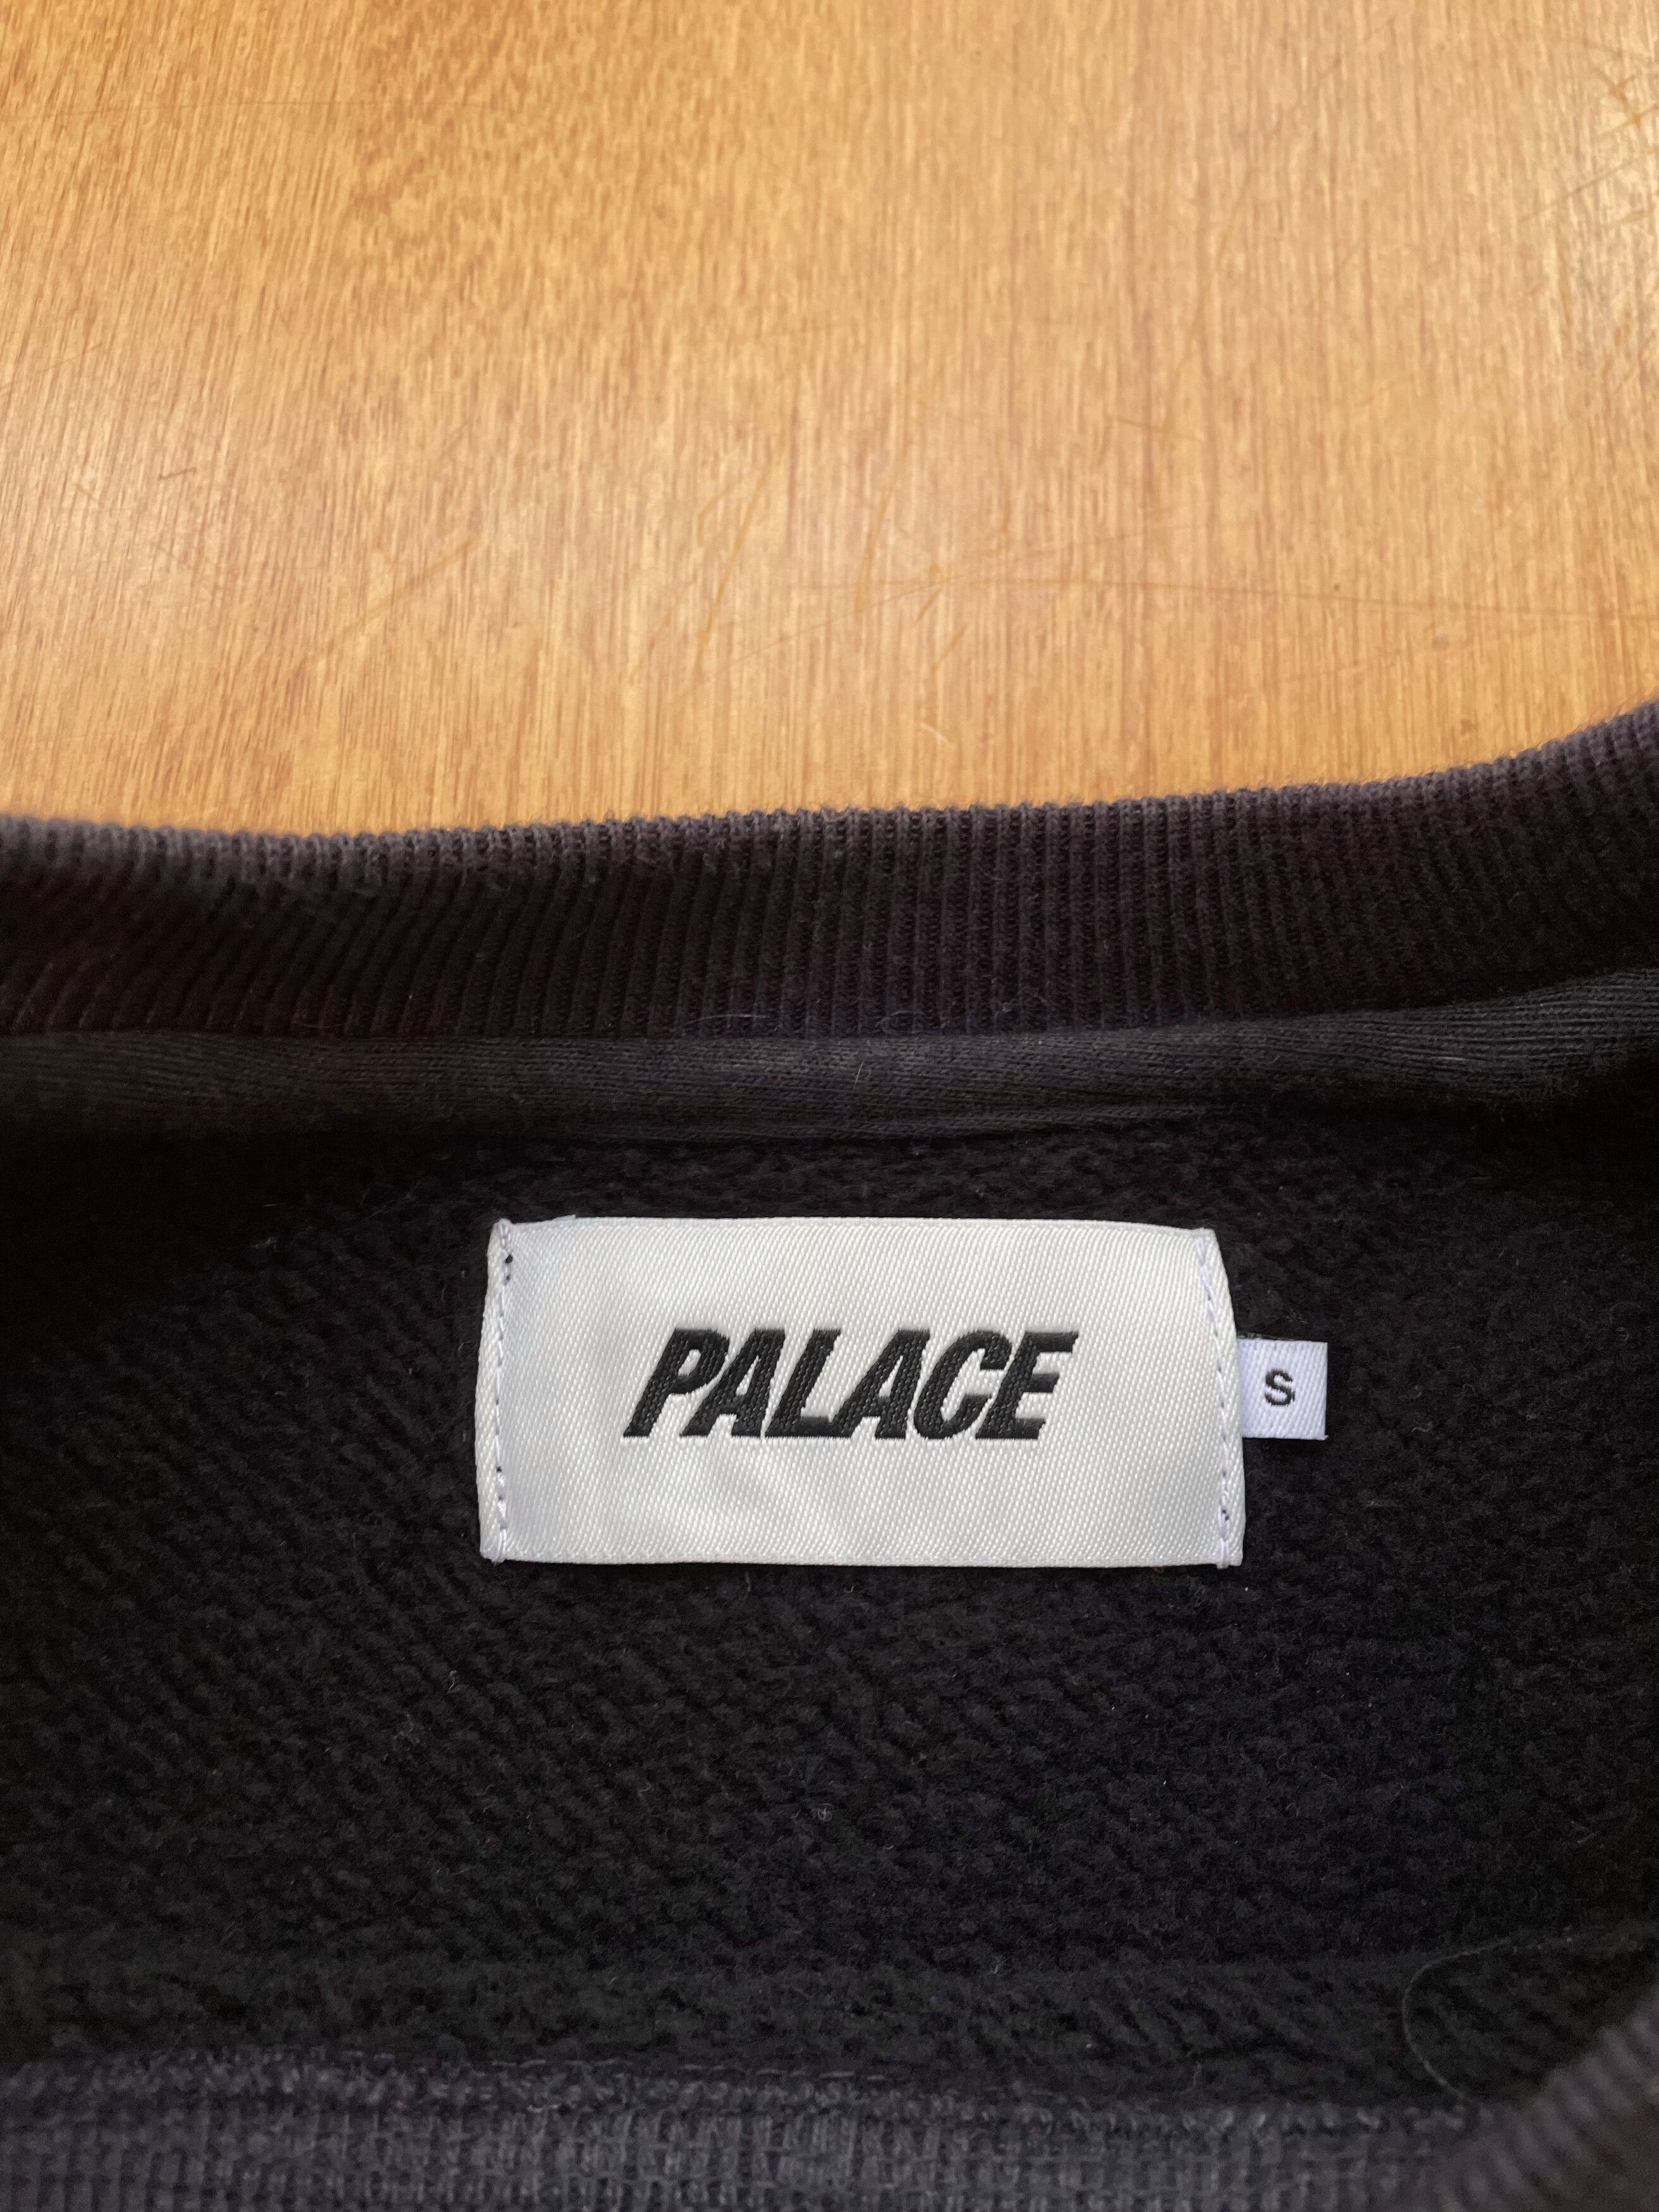 Palace Palace Patch Crew Black Size US S / EU 44-46 / 1 - 5 Thumbnail